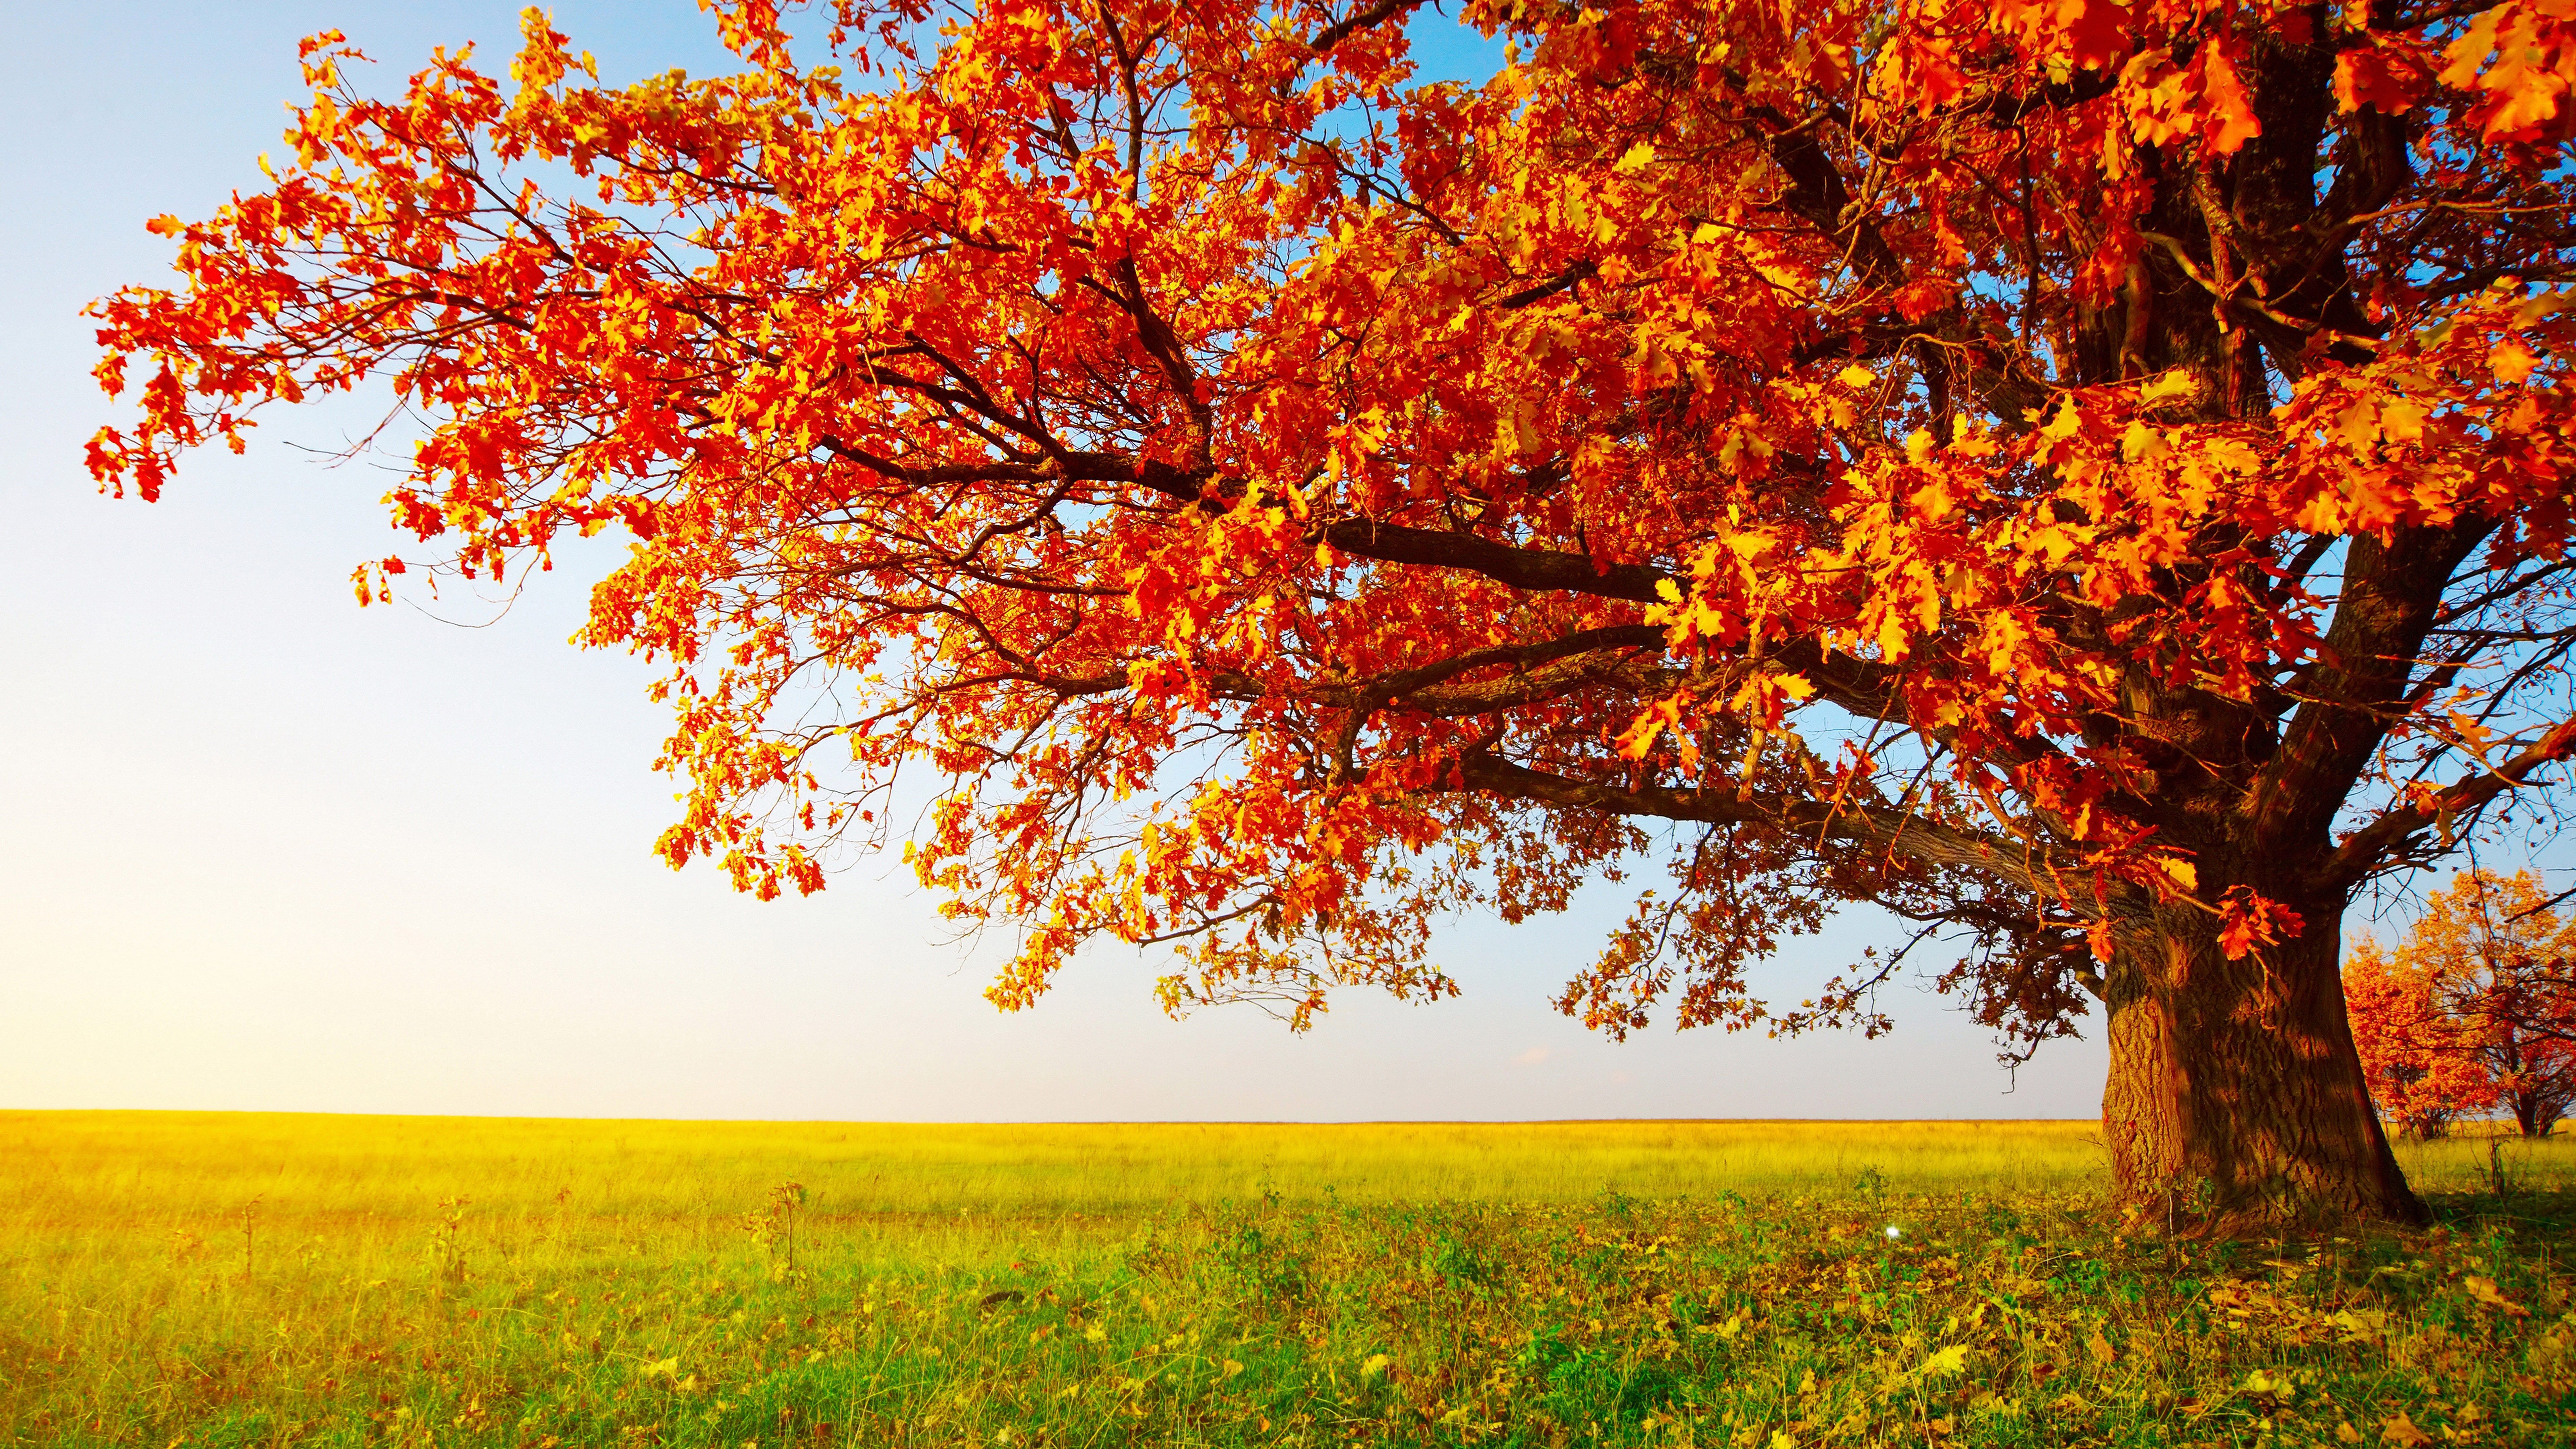 8k wallpaper fall landscape. Árboles en otoño, Fondos de pantalla paisajes, Paisaje de otoño